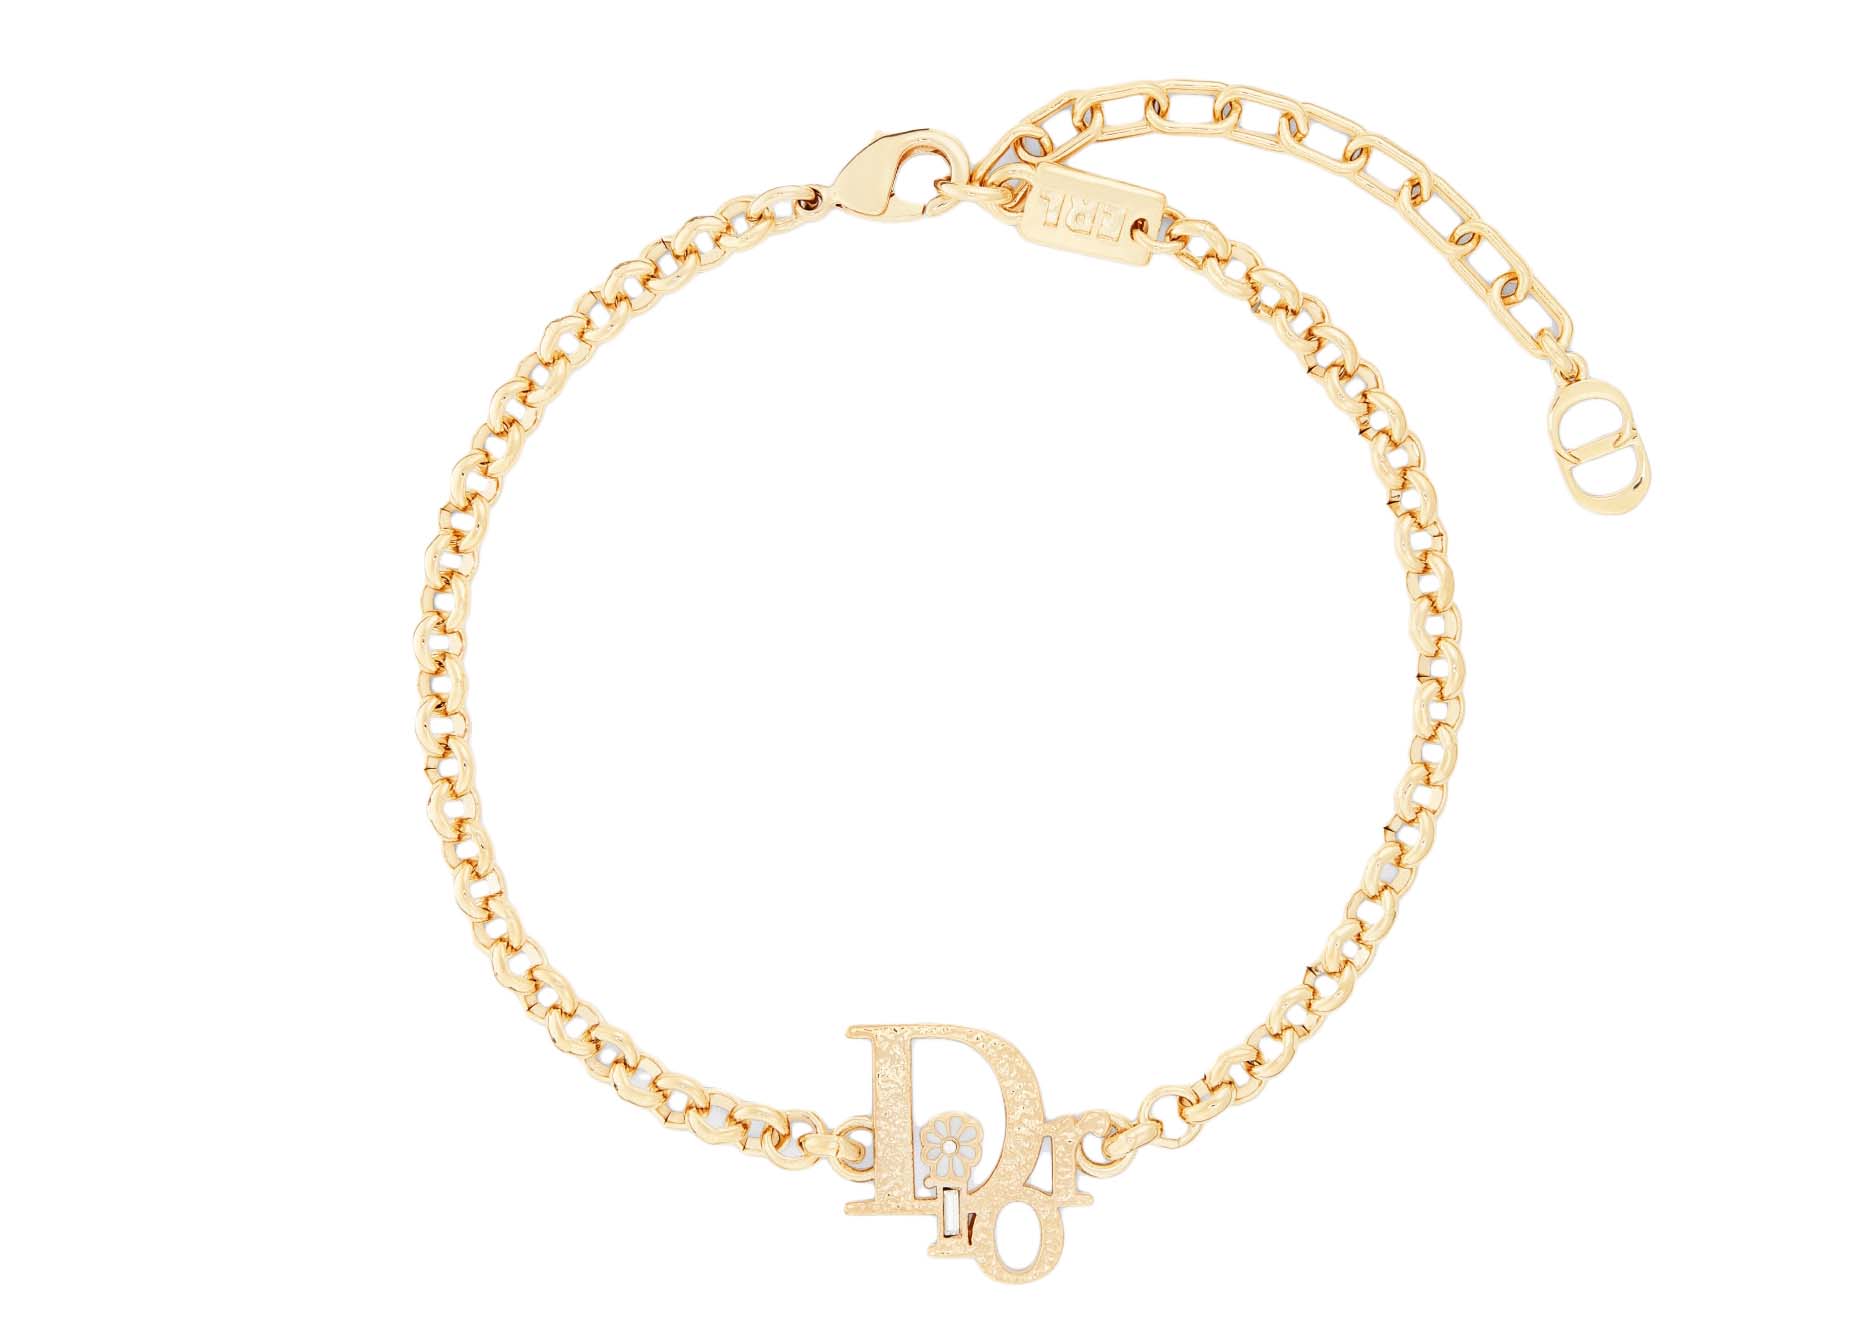 Luxury Leather Goods and Ready-to-Wear | DIOR | Dior bracelets, Fashion  bracelets, Bracelet set